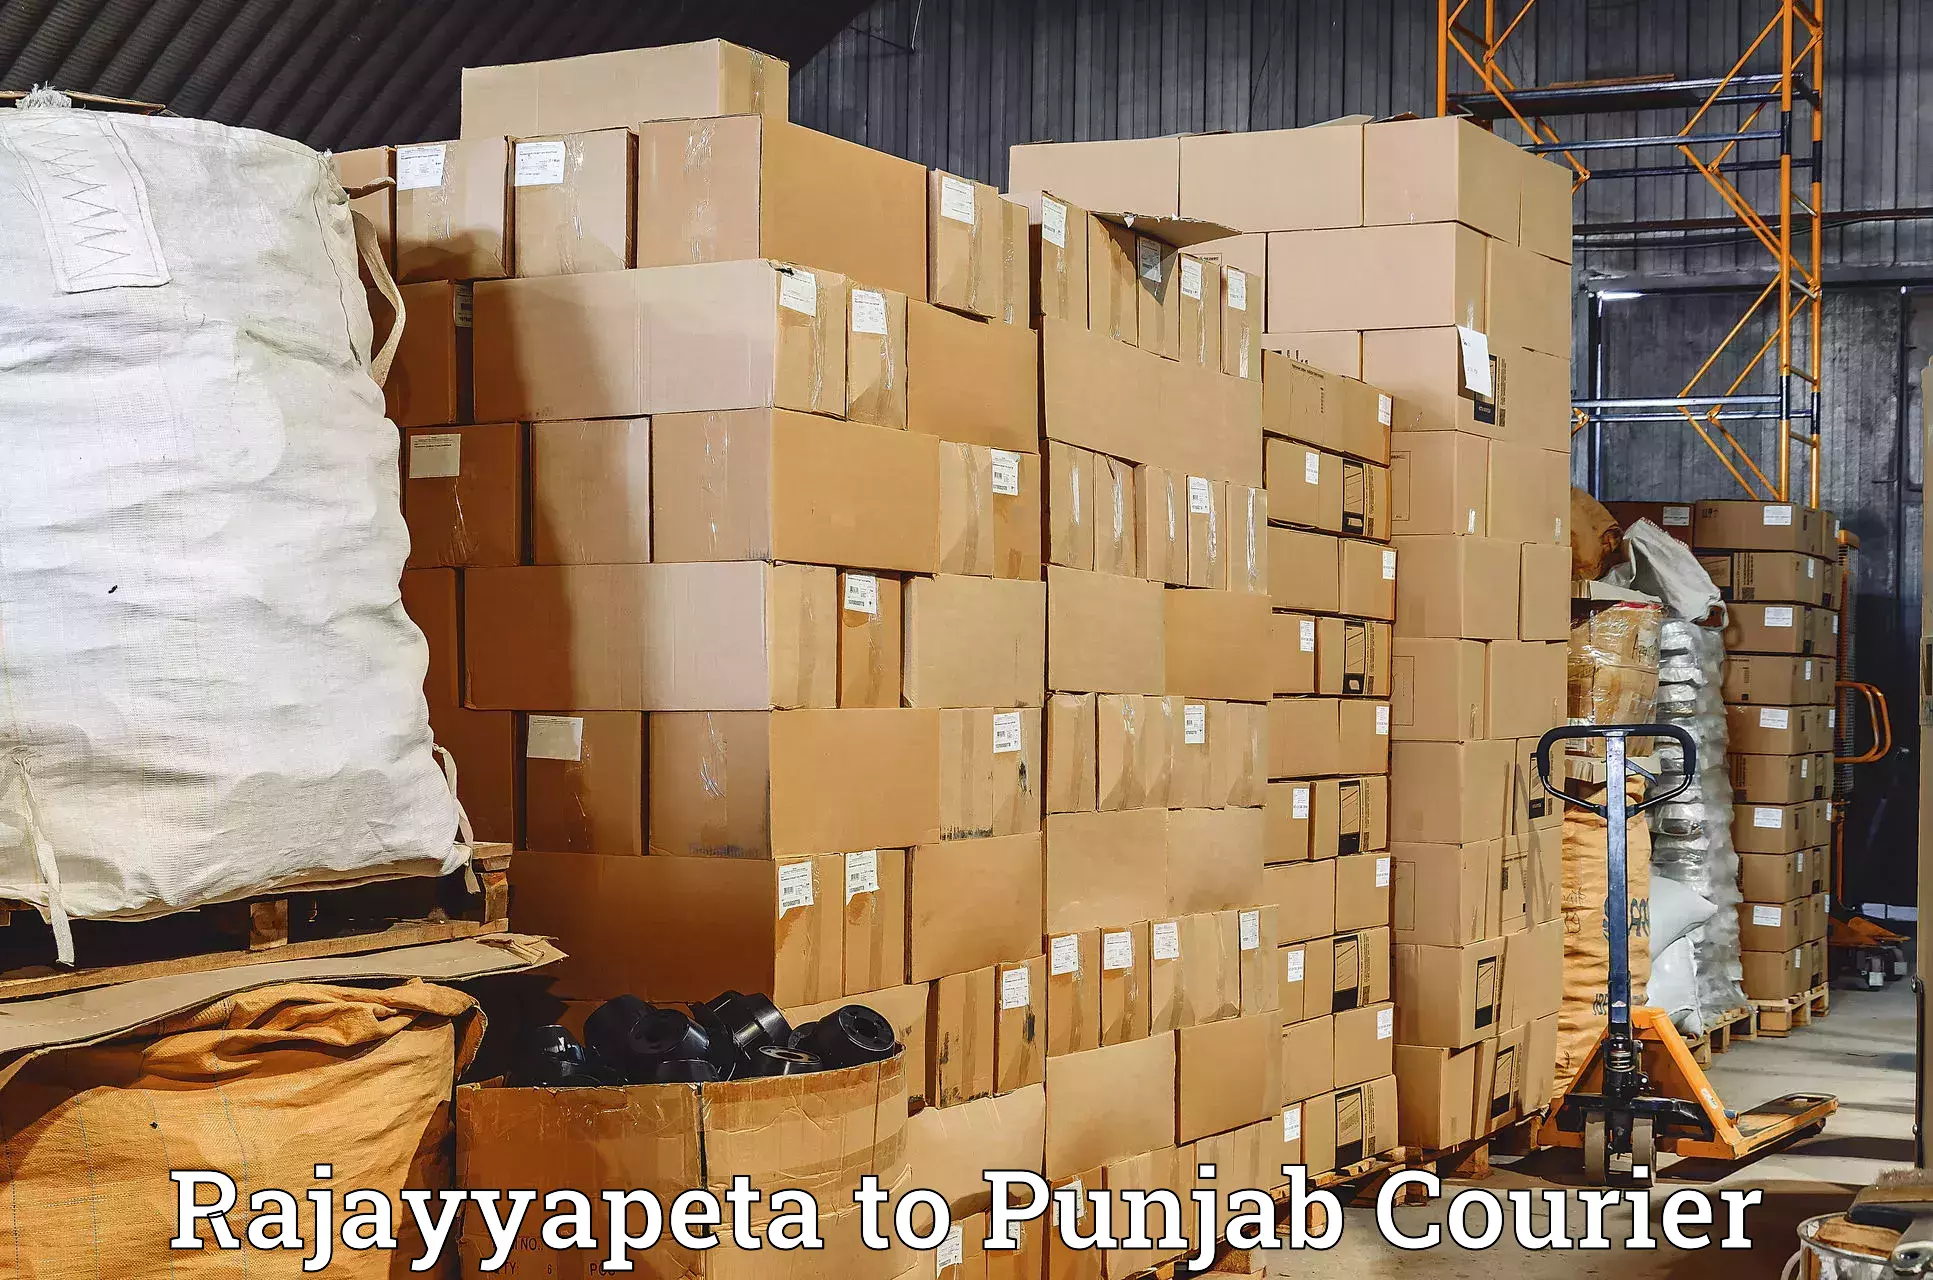 State-of-the-art courier technology Rajayyapeta to Ludhiana